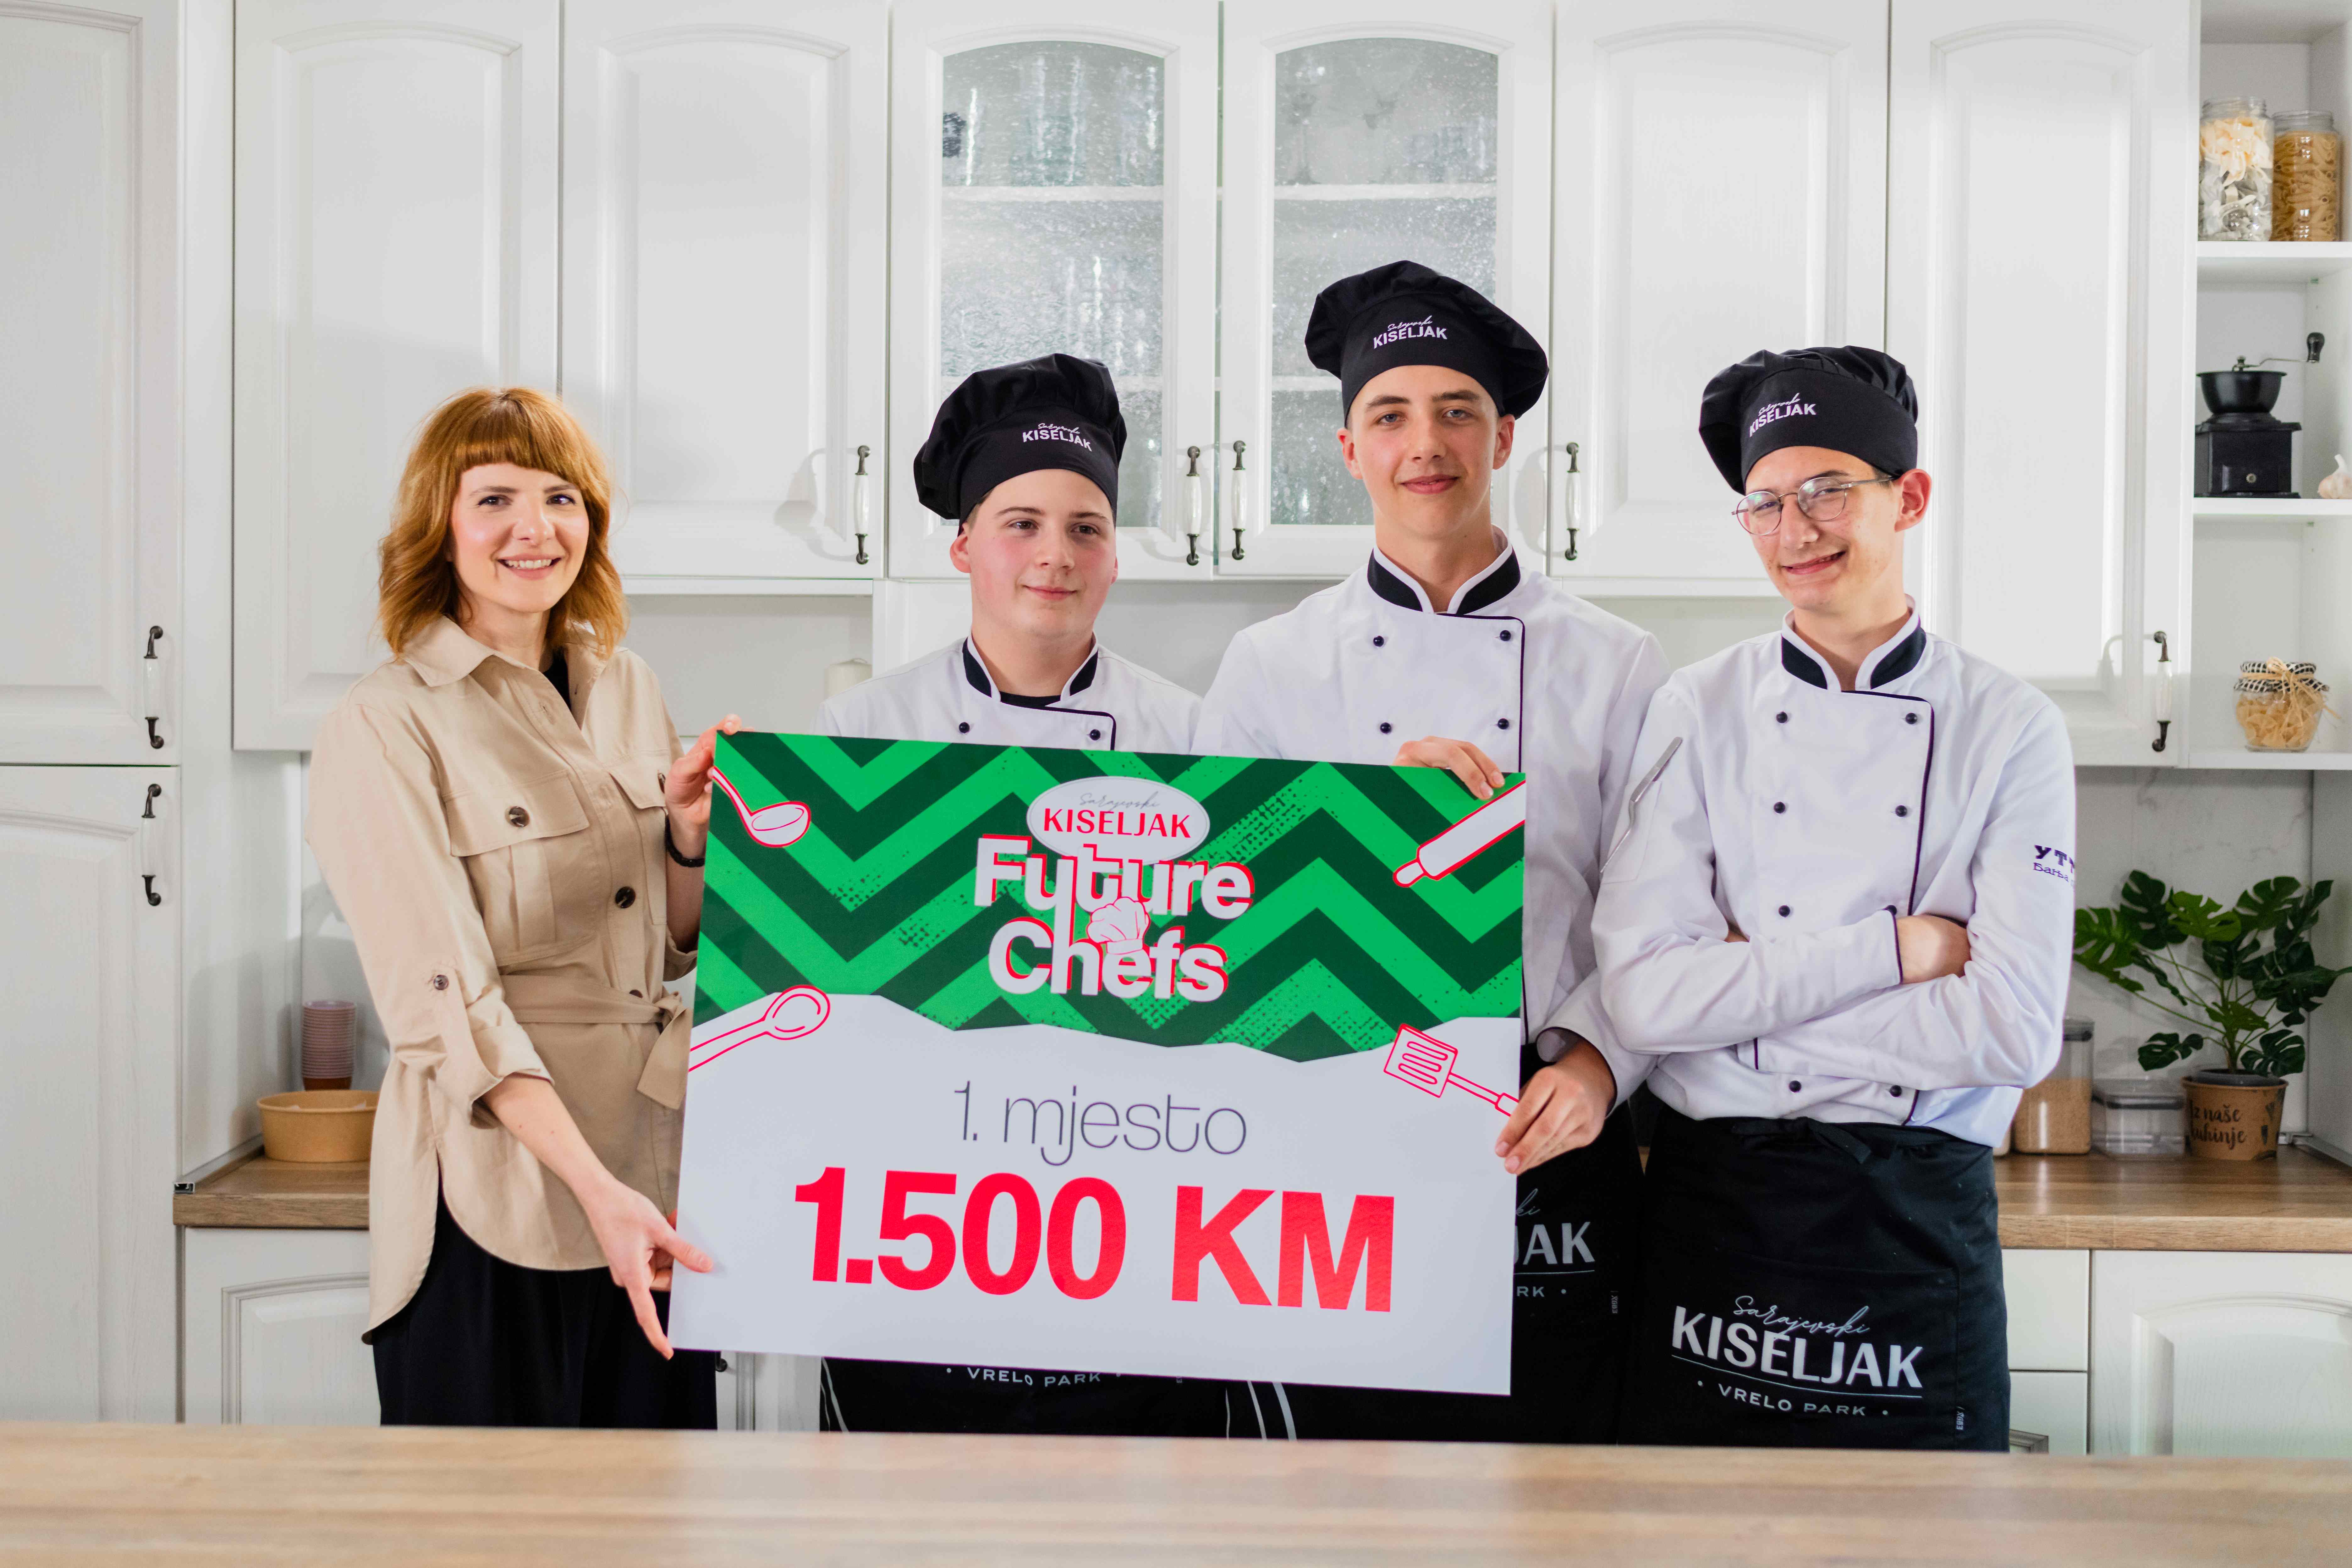 1_Banja_Luka_Urucenje_nagrade_Future_chefs.jpg